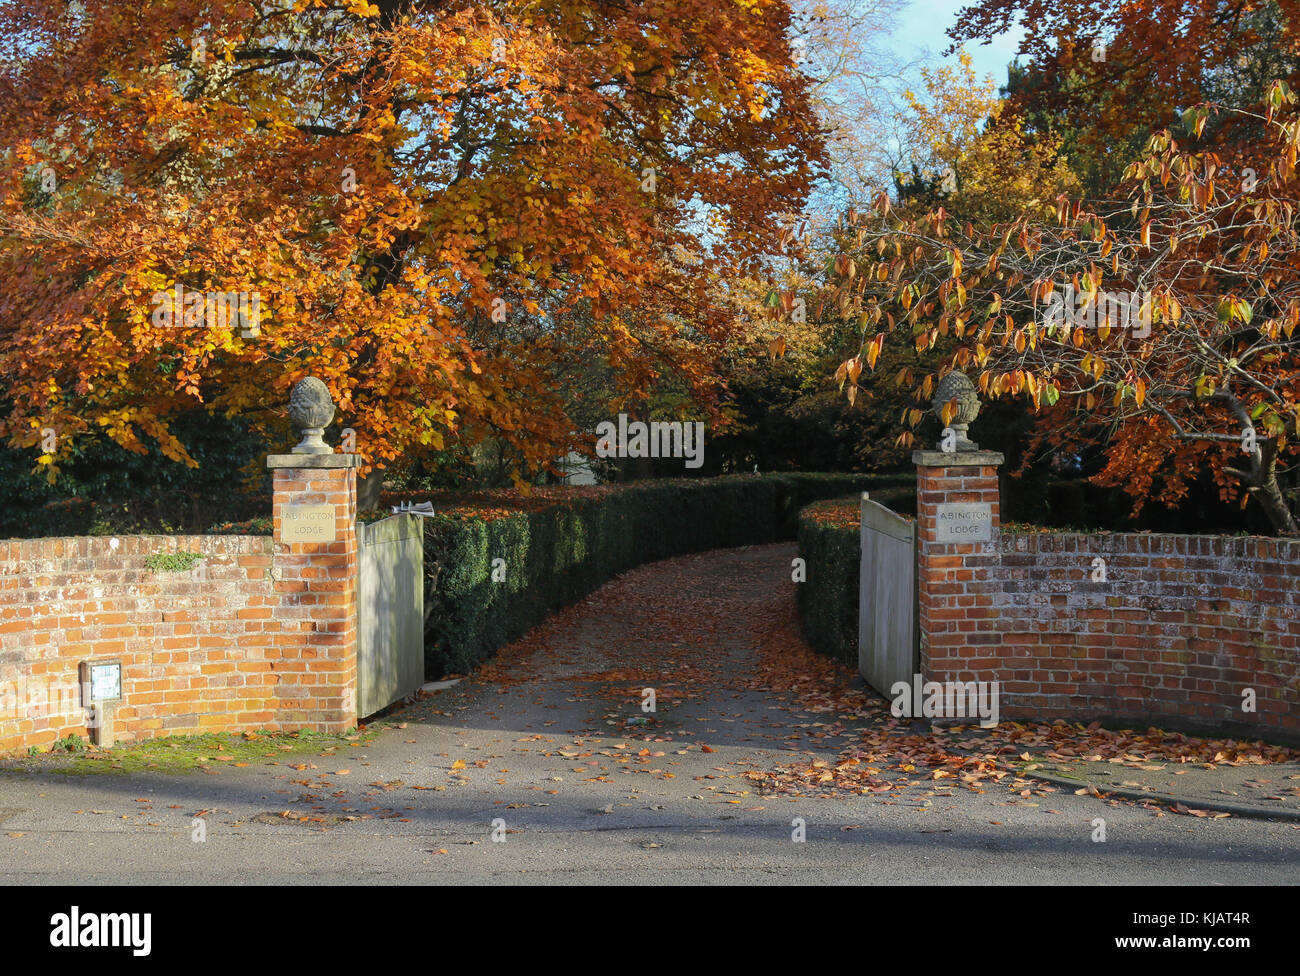 The entrance to Abington manor, Great Abington, Cambridgeshire Stock Photo